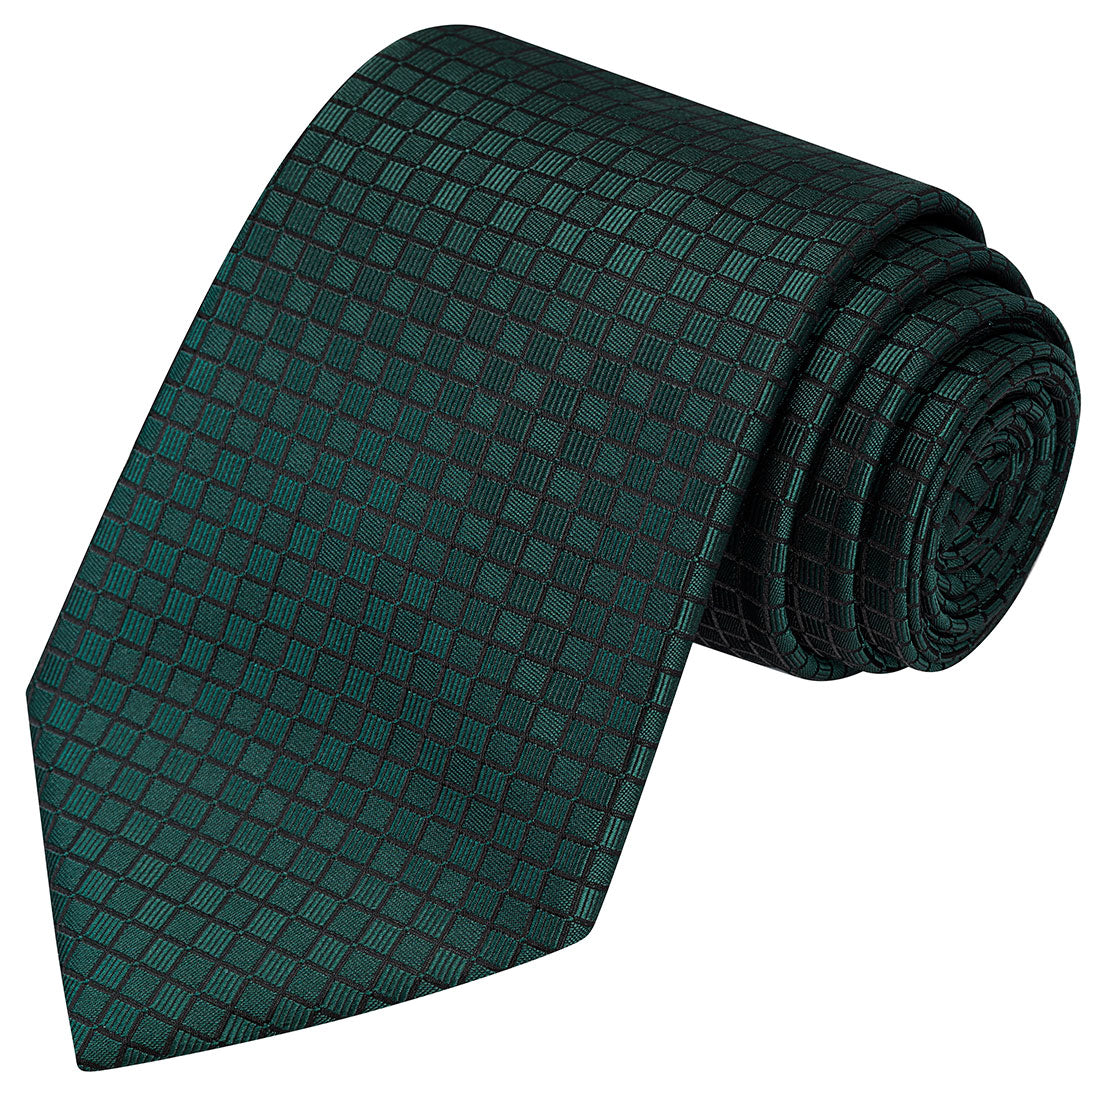 Spectra Green Checkered Tie - Tie, bowtie, pocket square  | Kissties